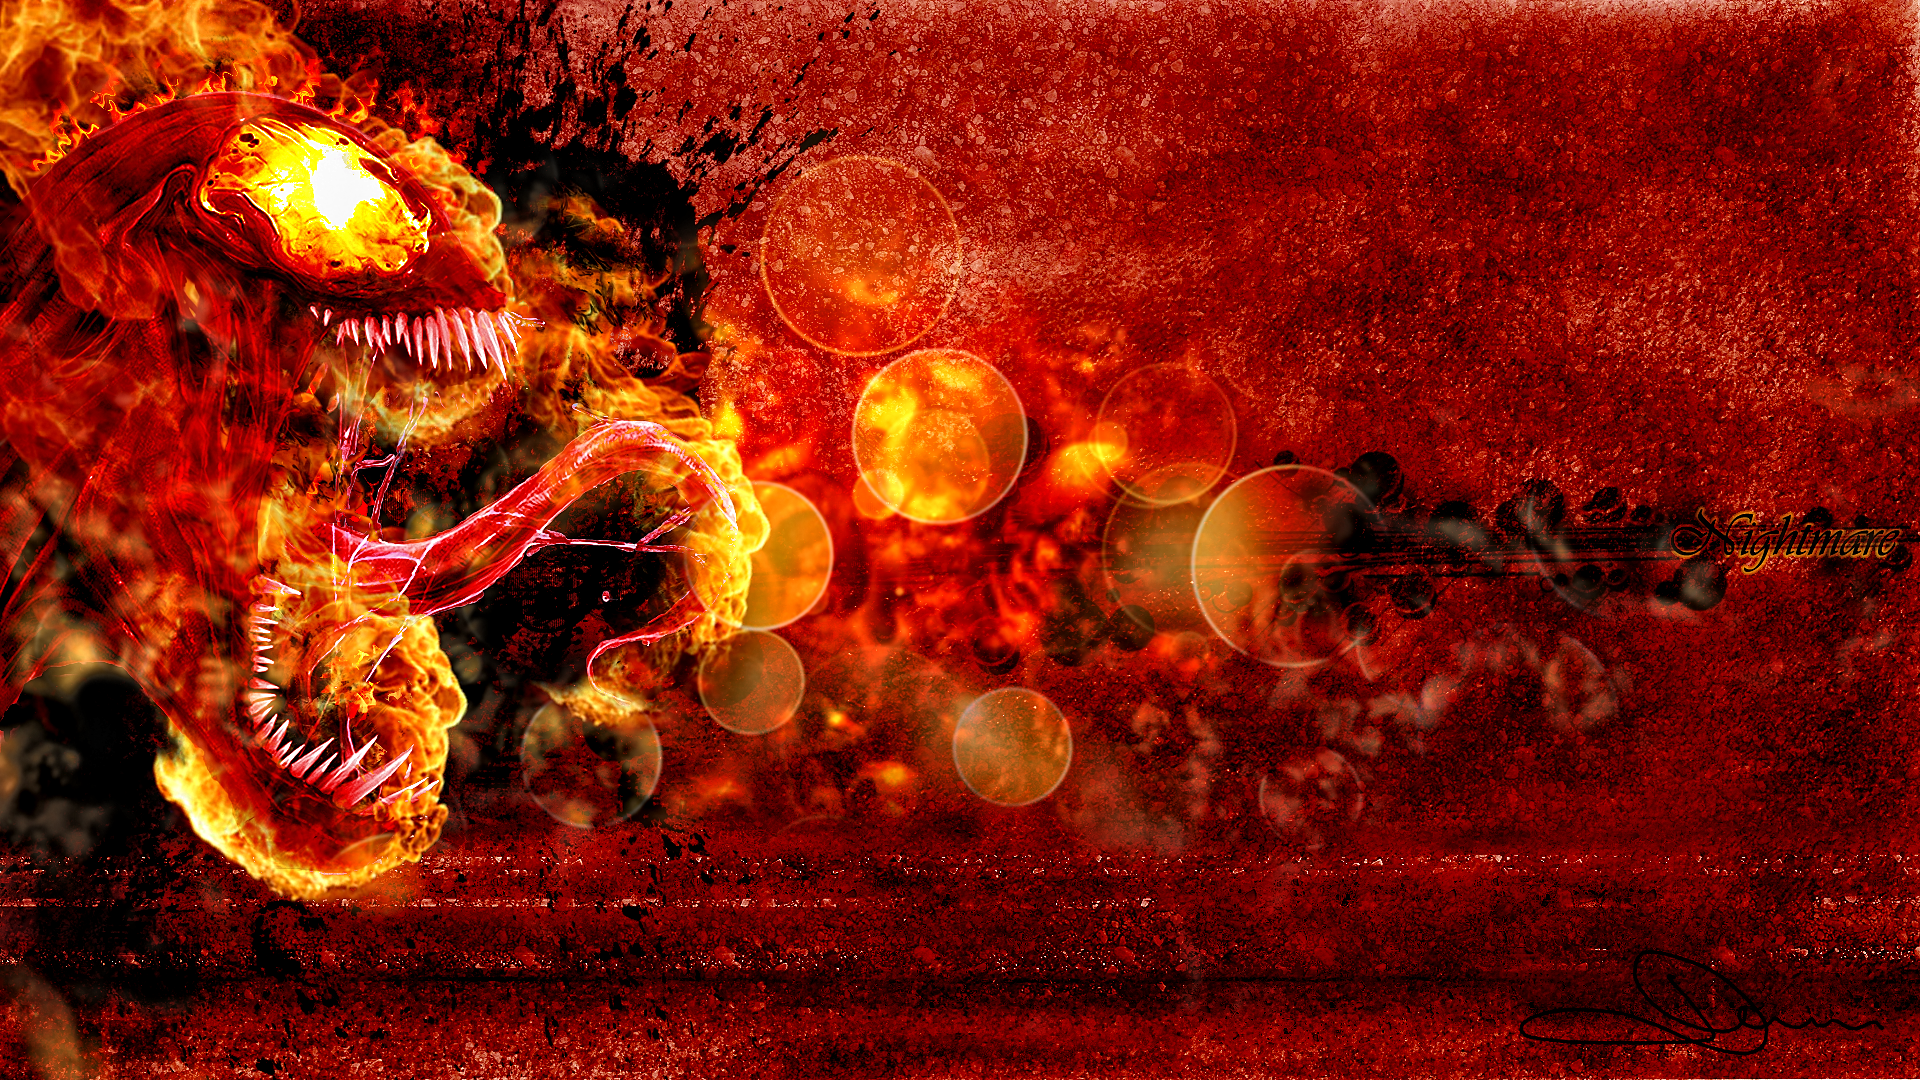 General 1920x1080 fantasy art Venom digital art tongues fire Spider-Man Flame Painter burning creature